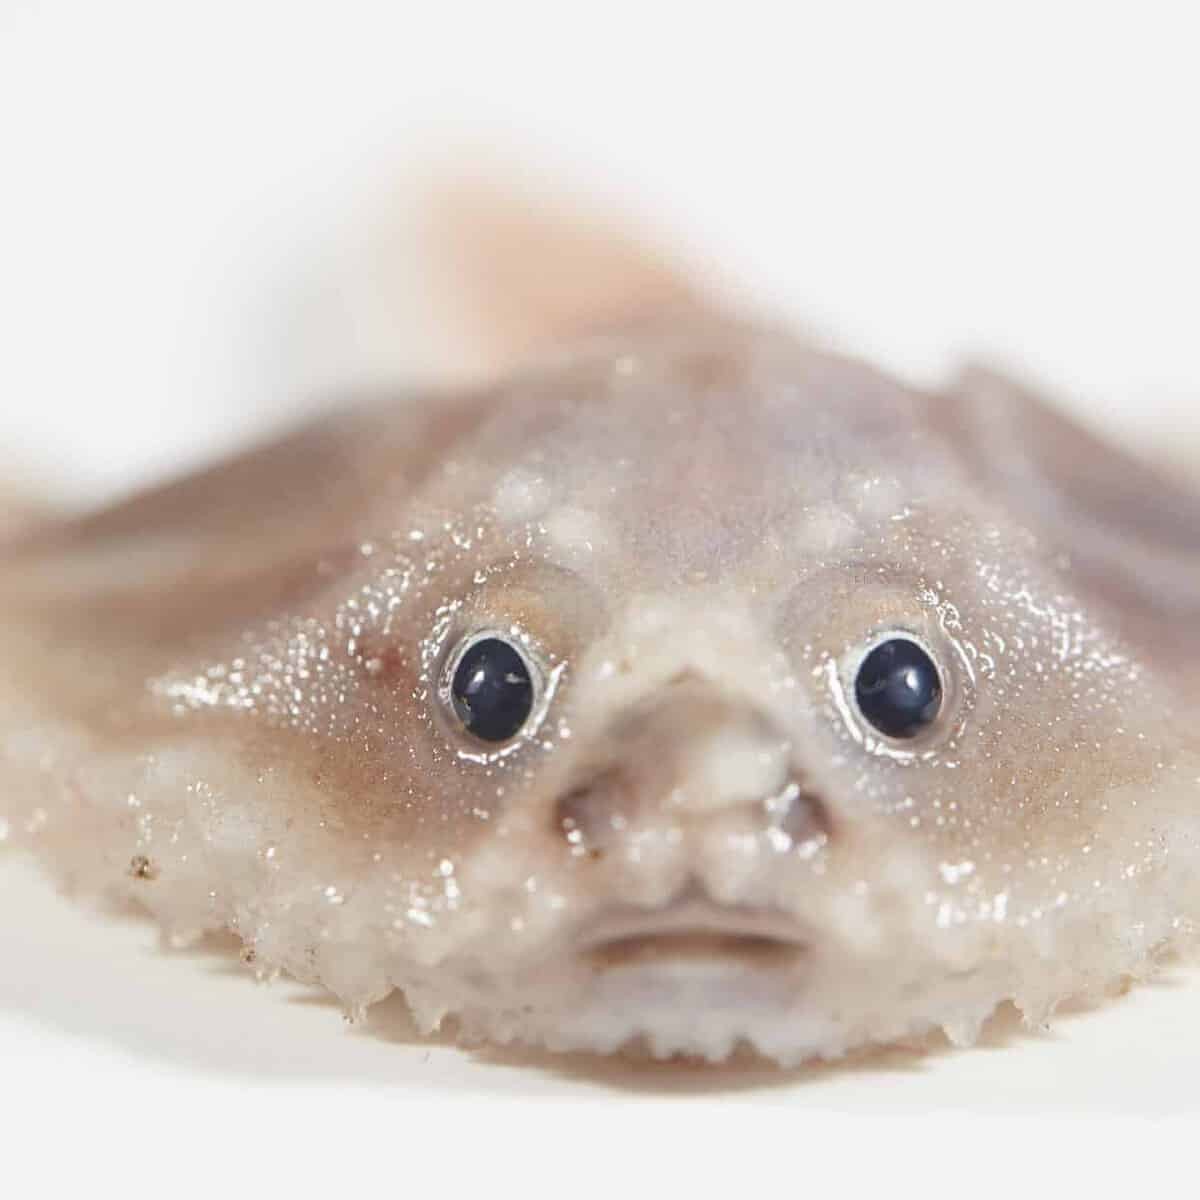 Deep-sea Batfish (Image credit: Museums Victoria/Ben Healley)